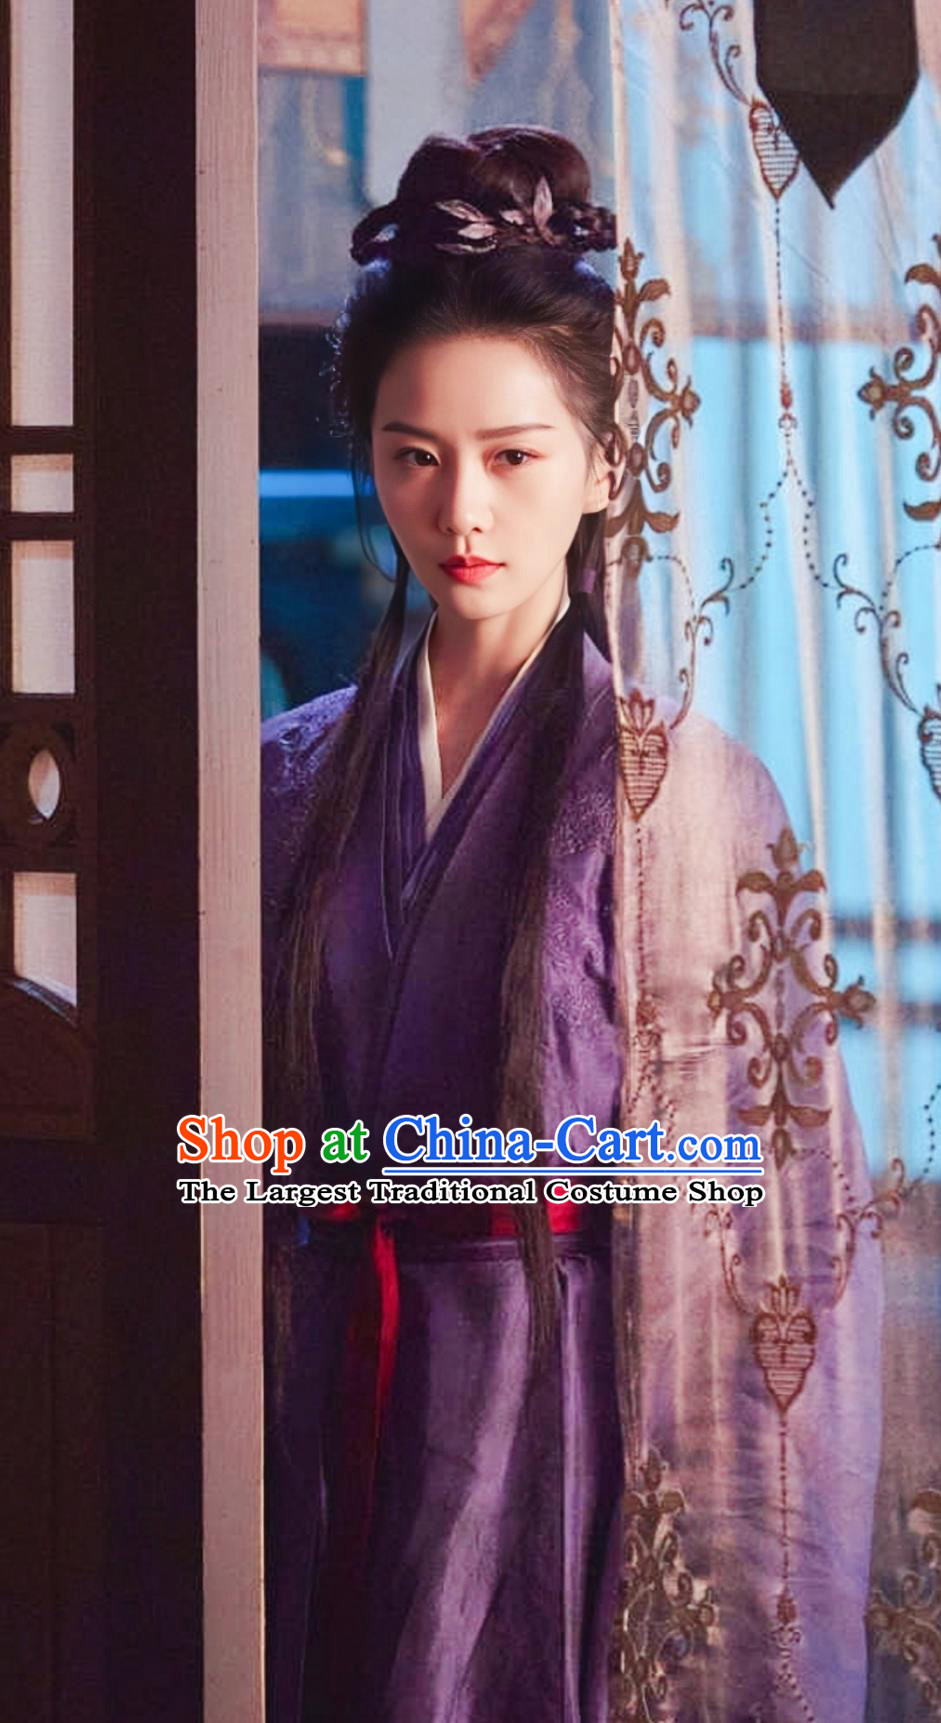 2023 TV Series A Journey To Love Female Assassin Ren Ru Yi Purple Dress China Ancient Super Heroine Clothing